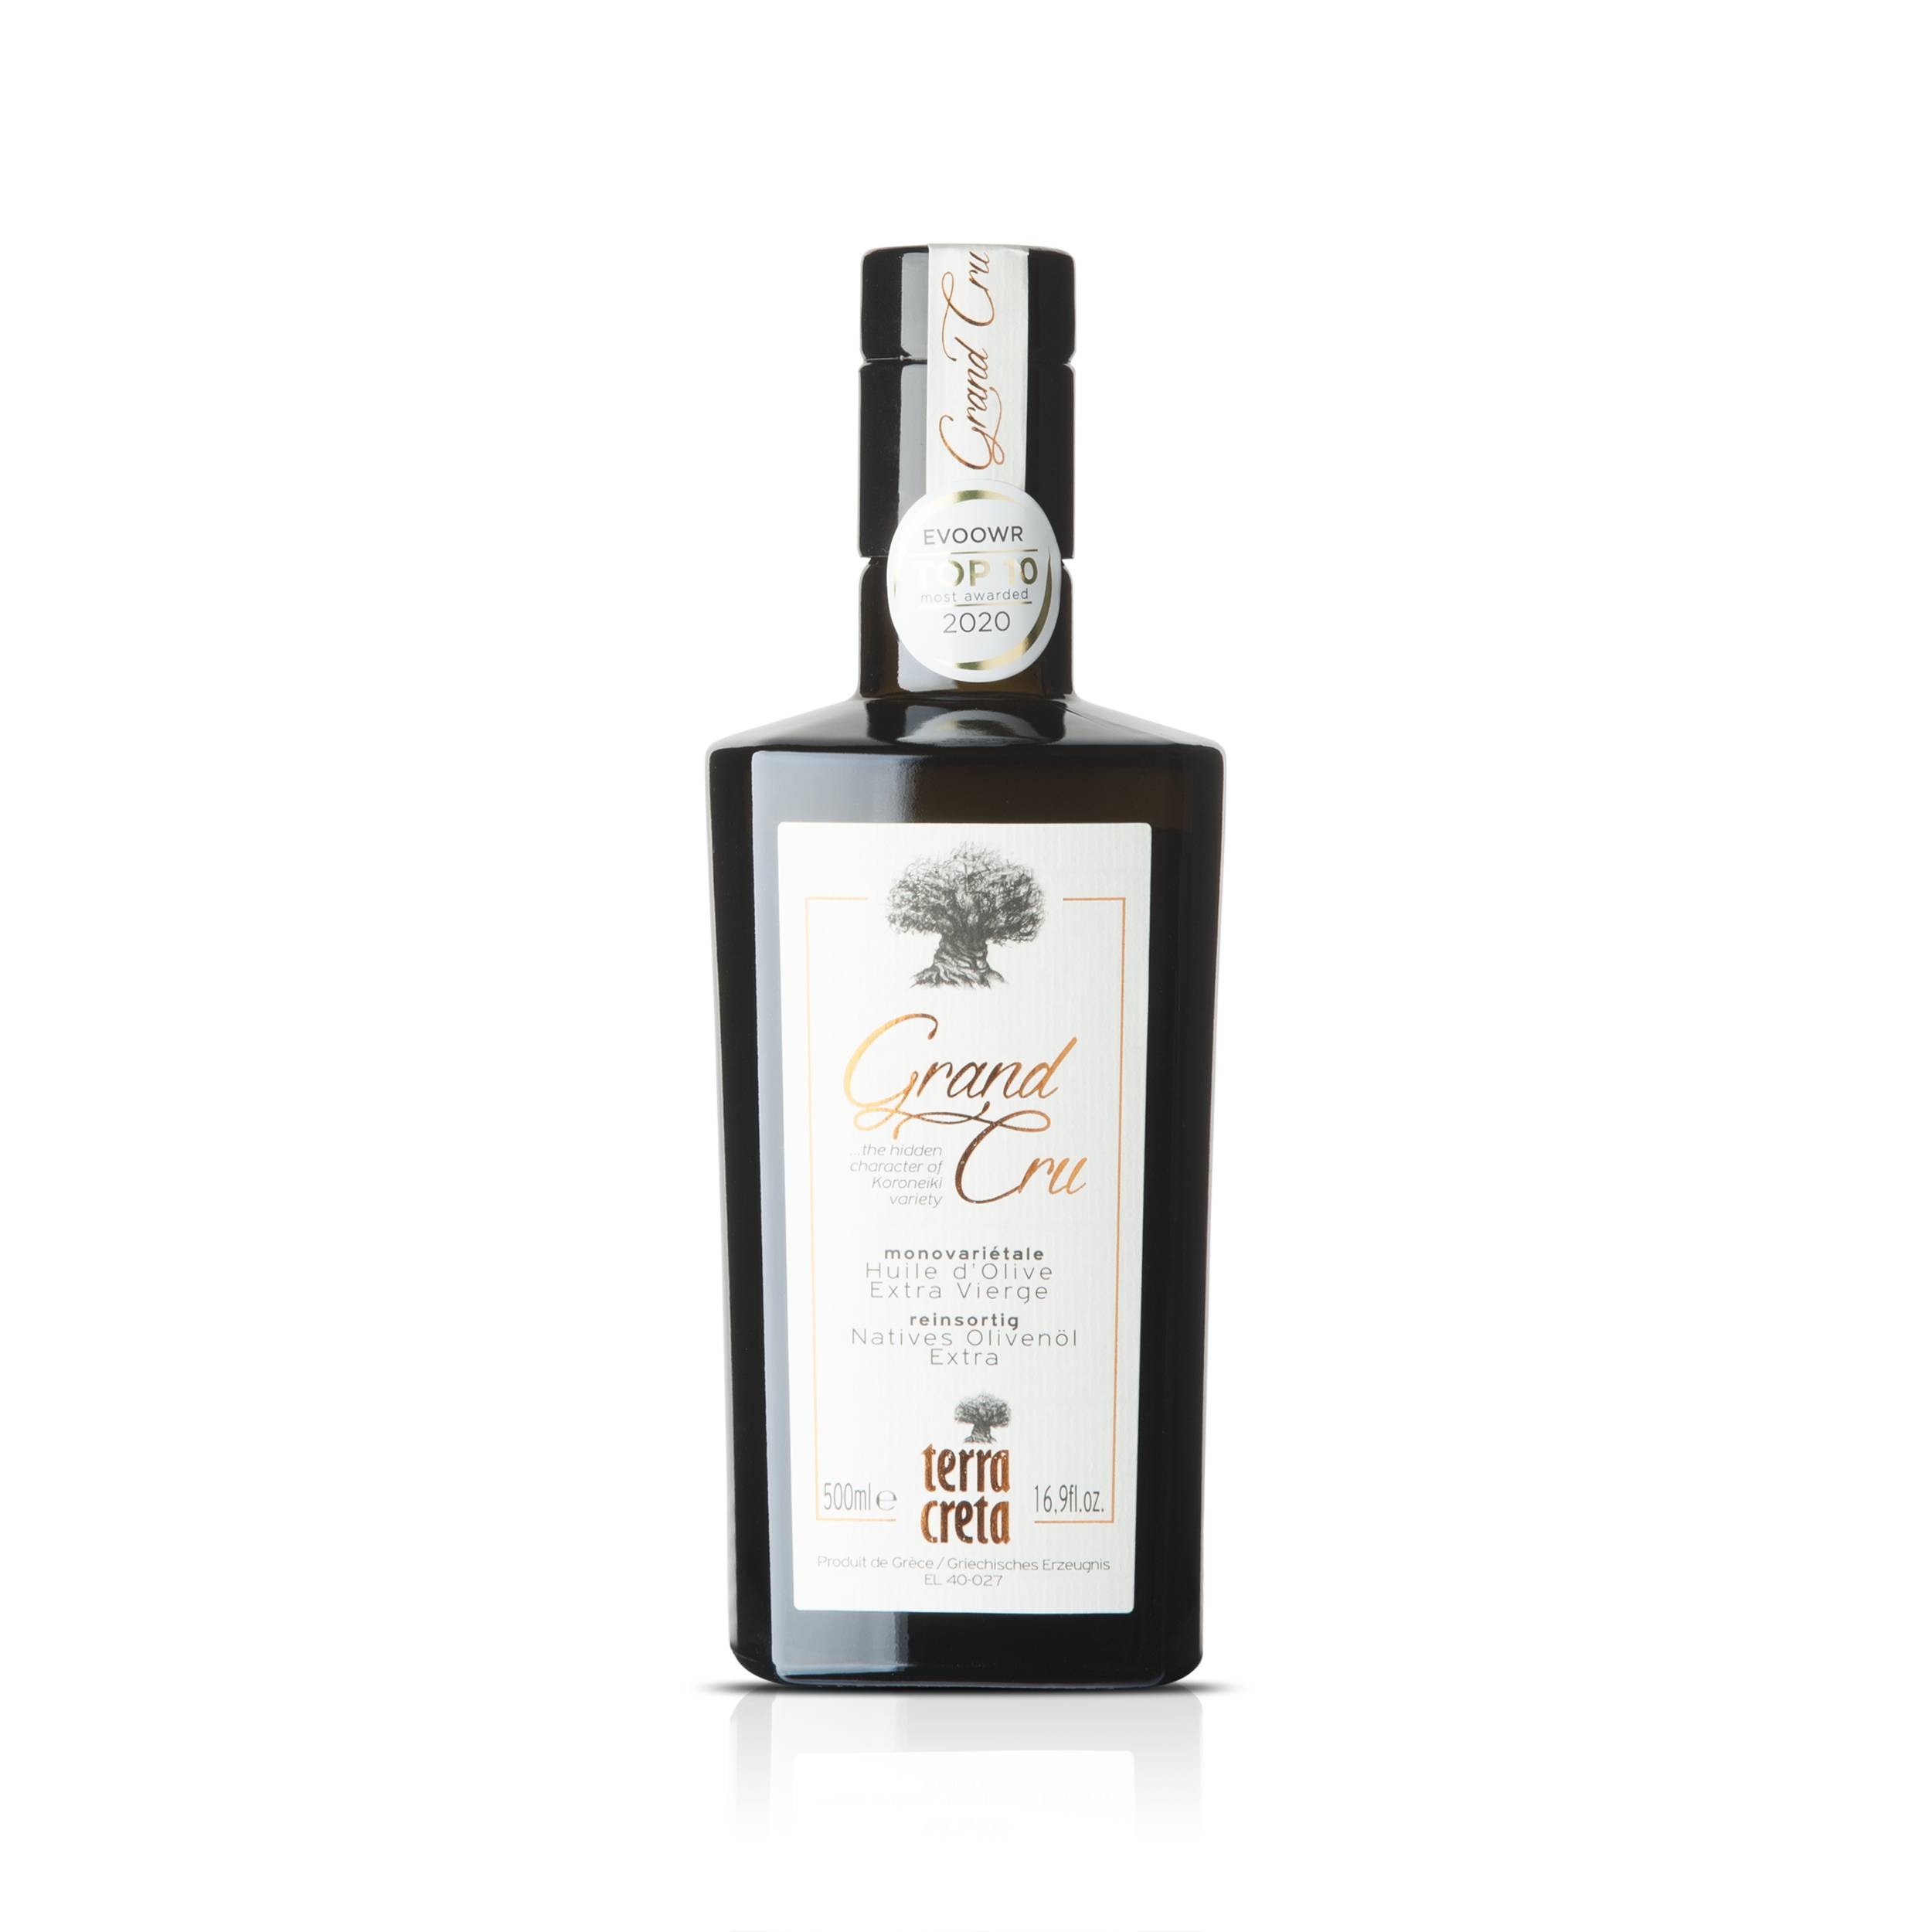 Kretisches Olivenöl Terra Creta - WANI Webshop - Olivenöl, Oliven,  Geschenkboxen